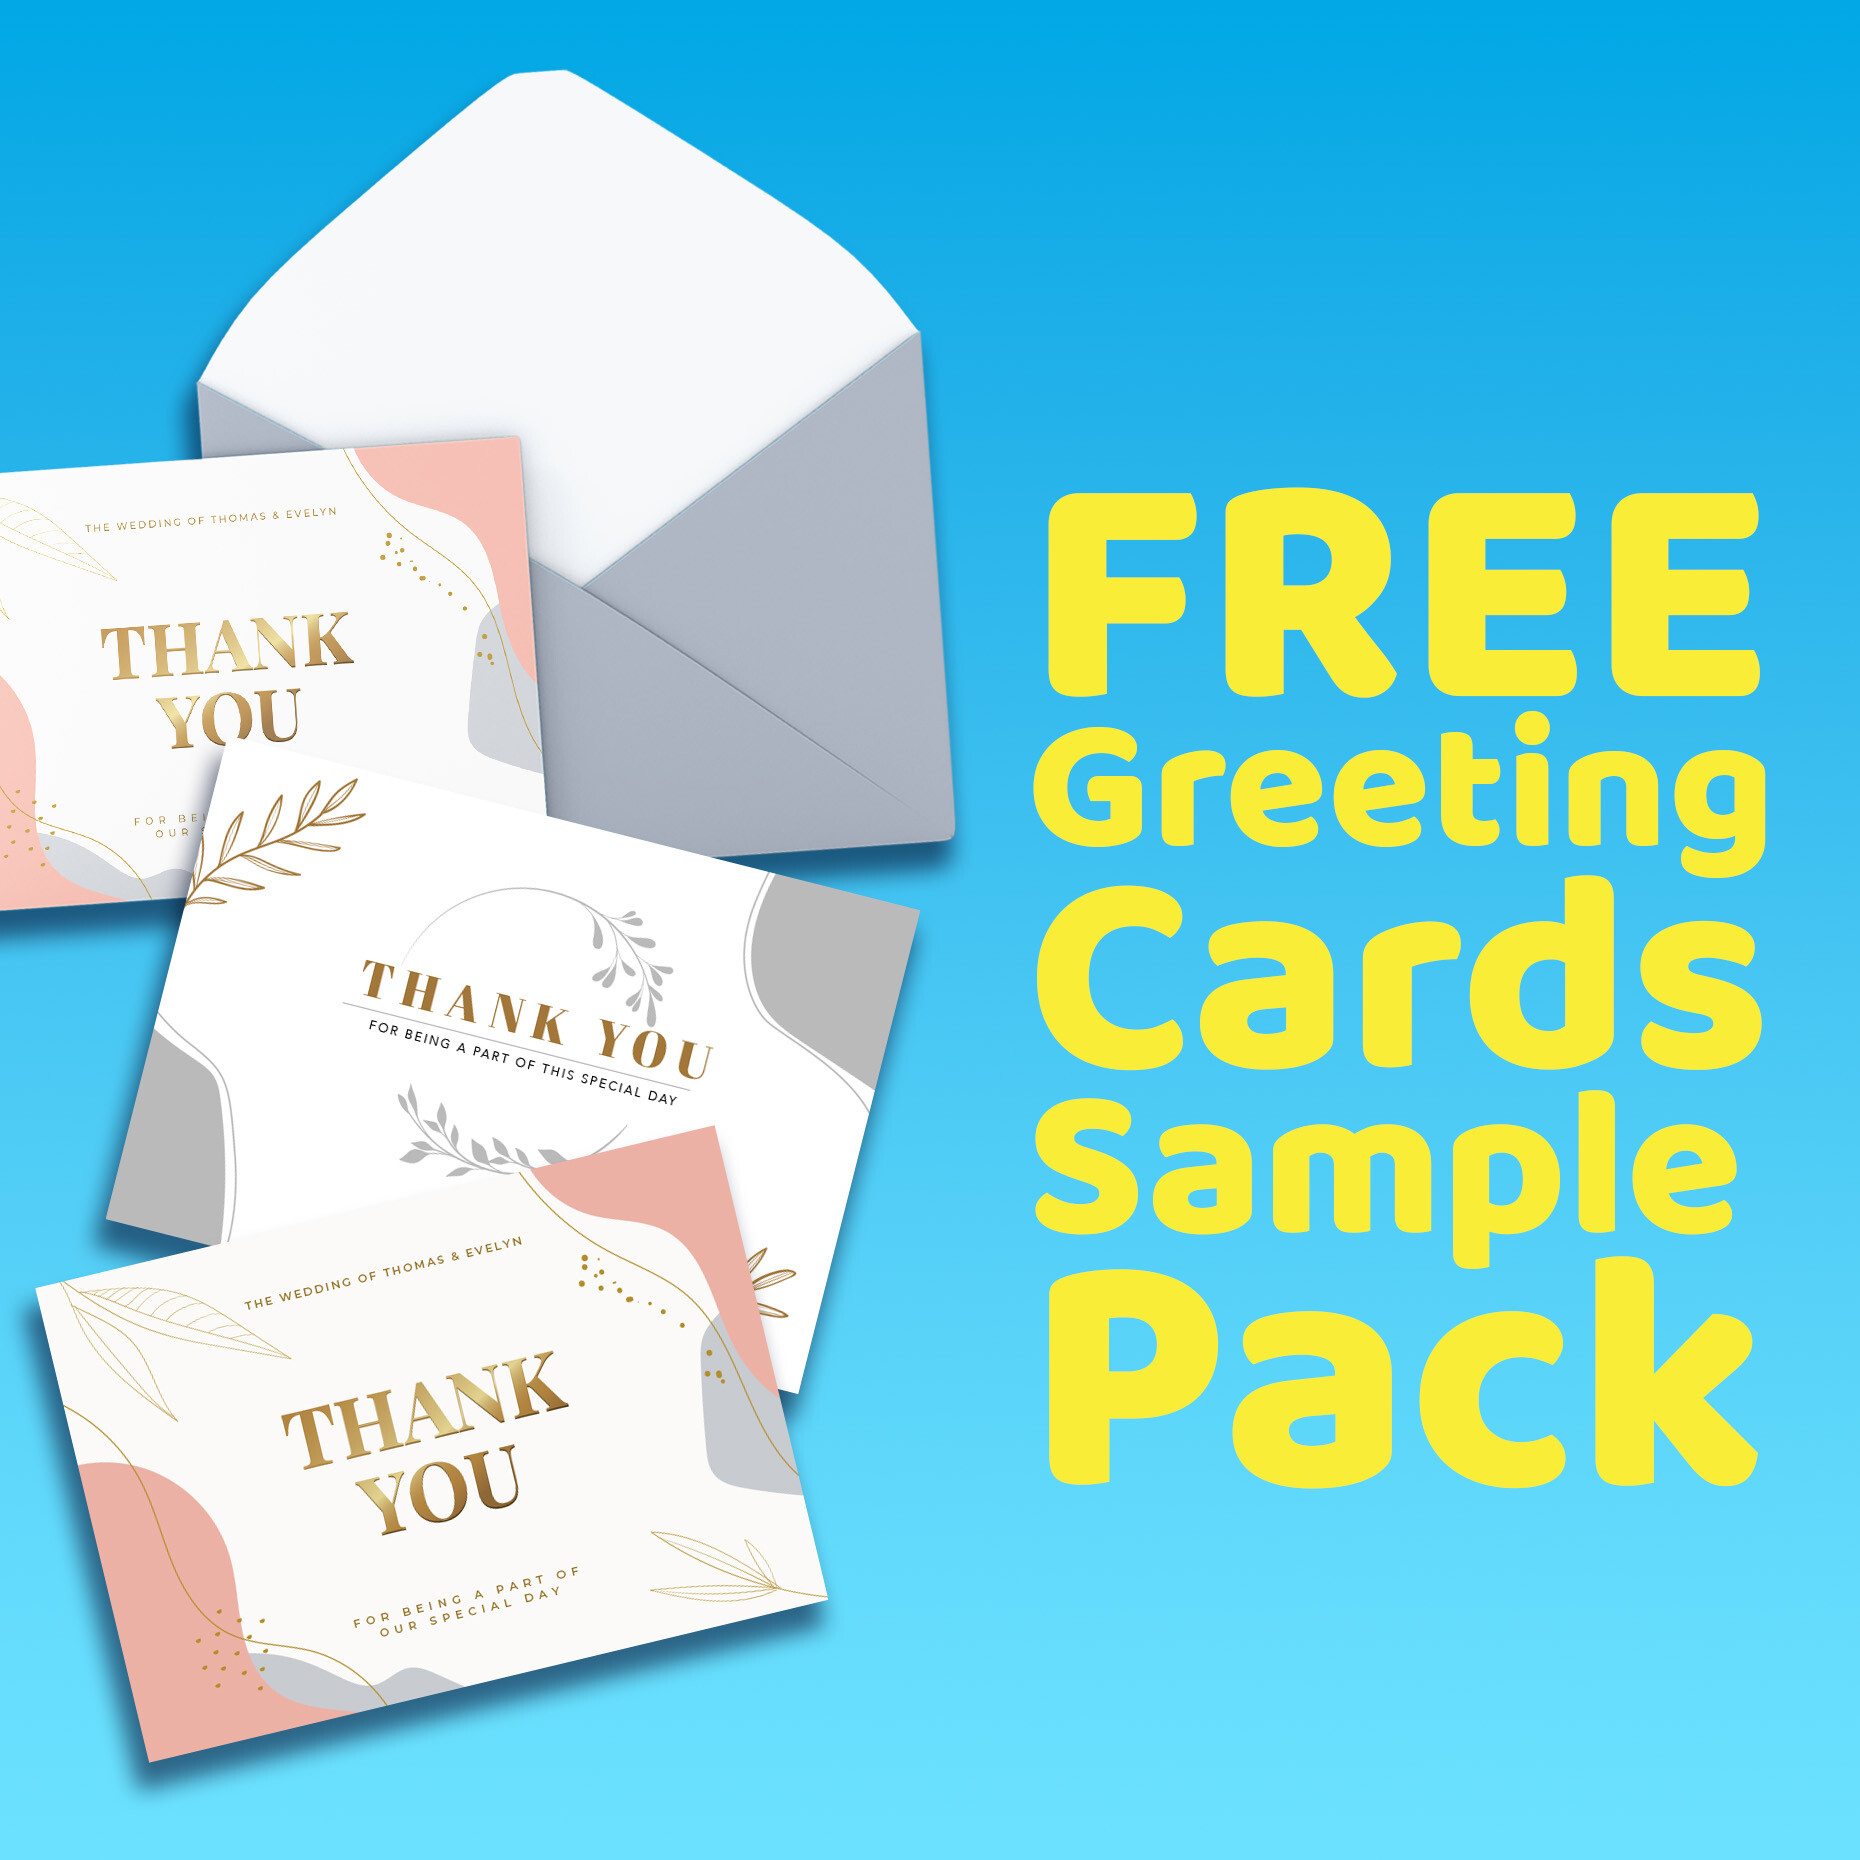 Free - Greeting Cards Sample Pack